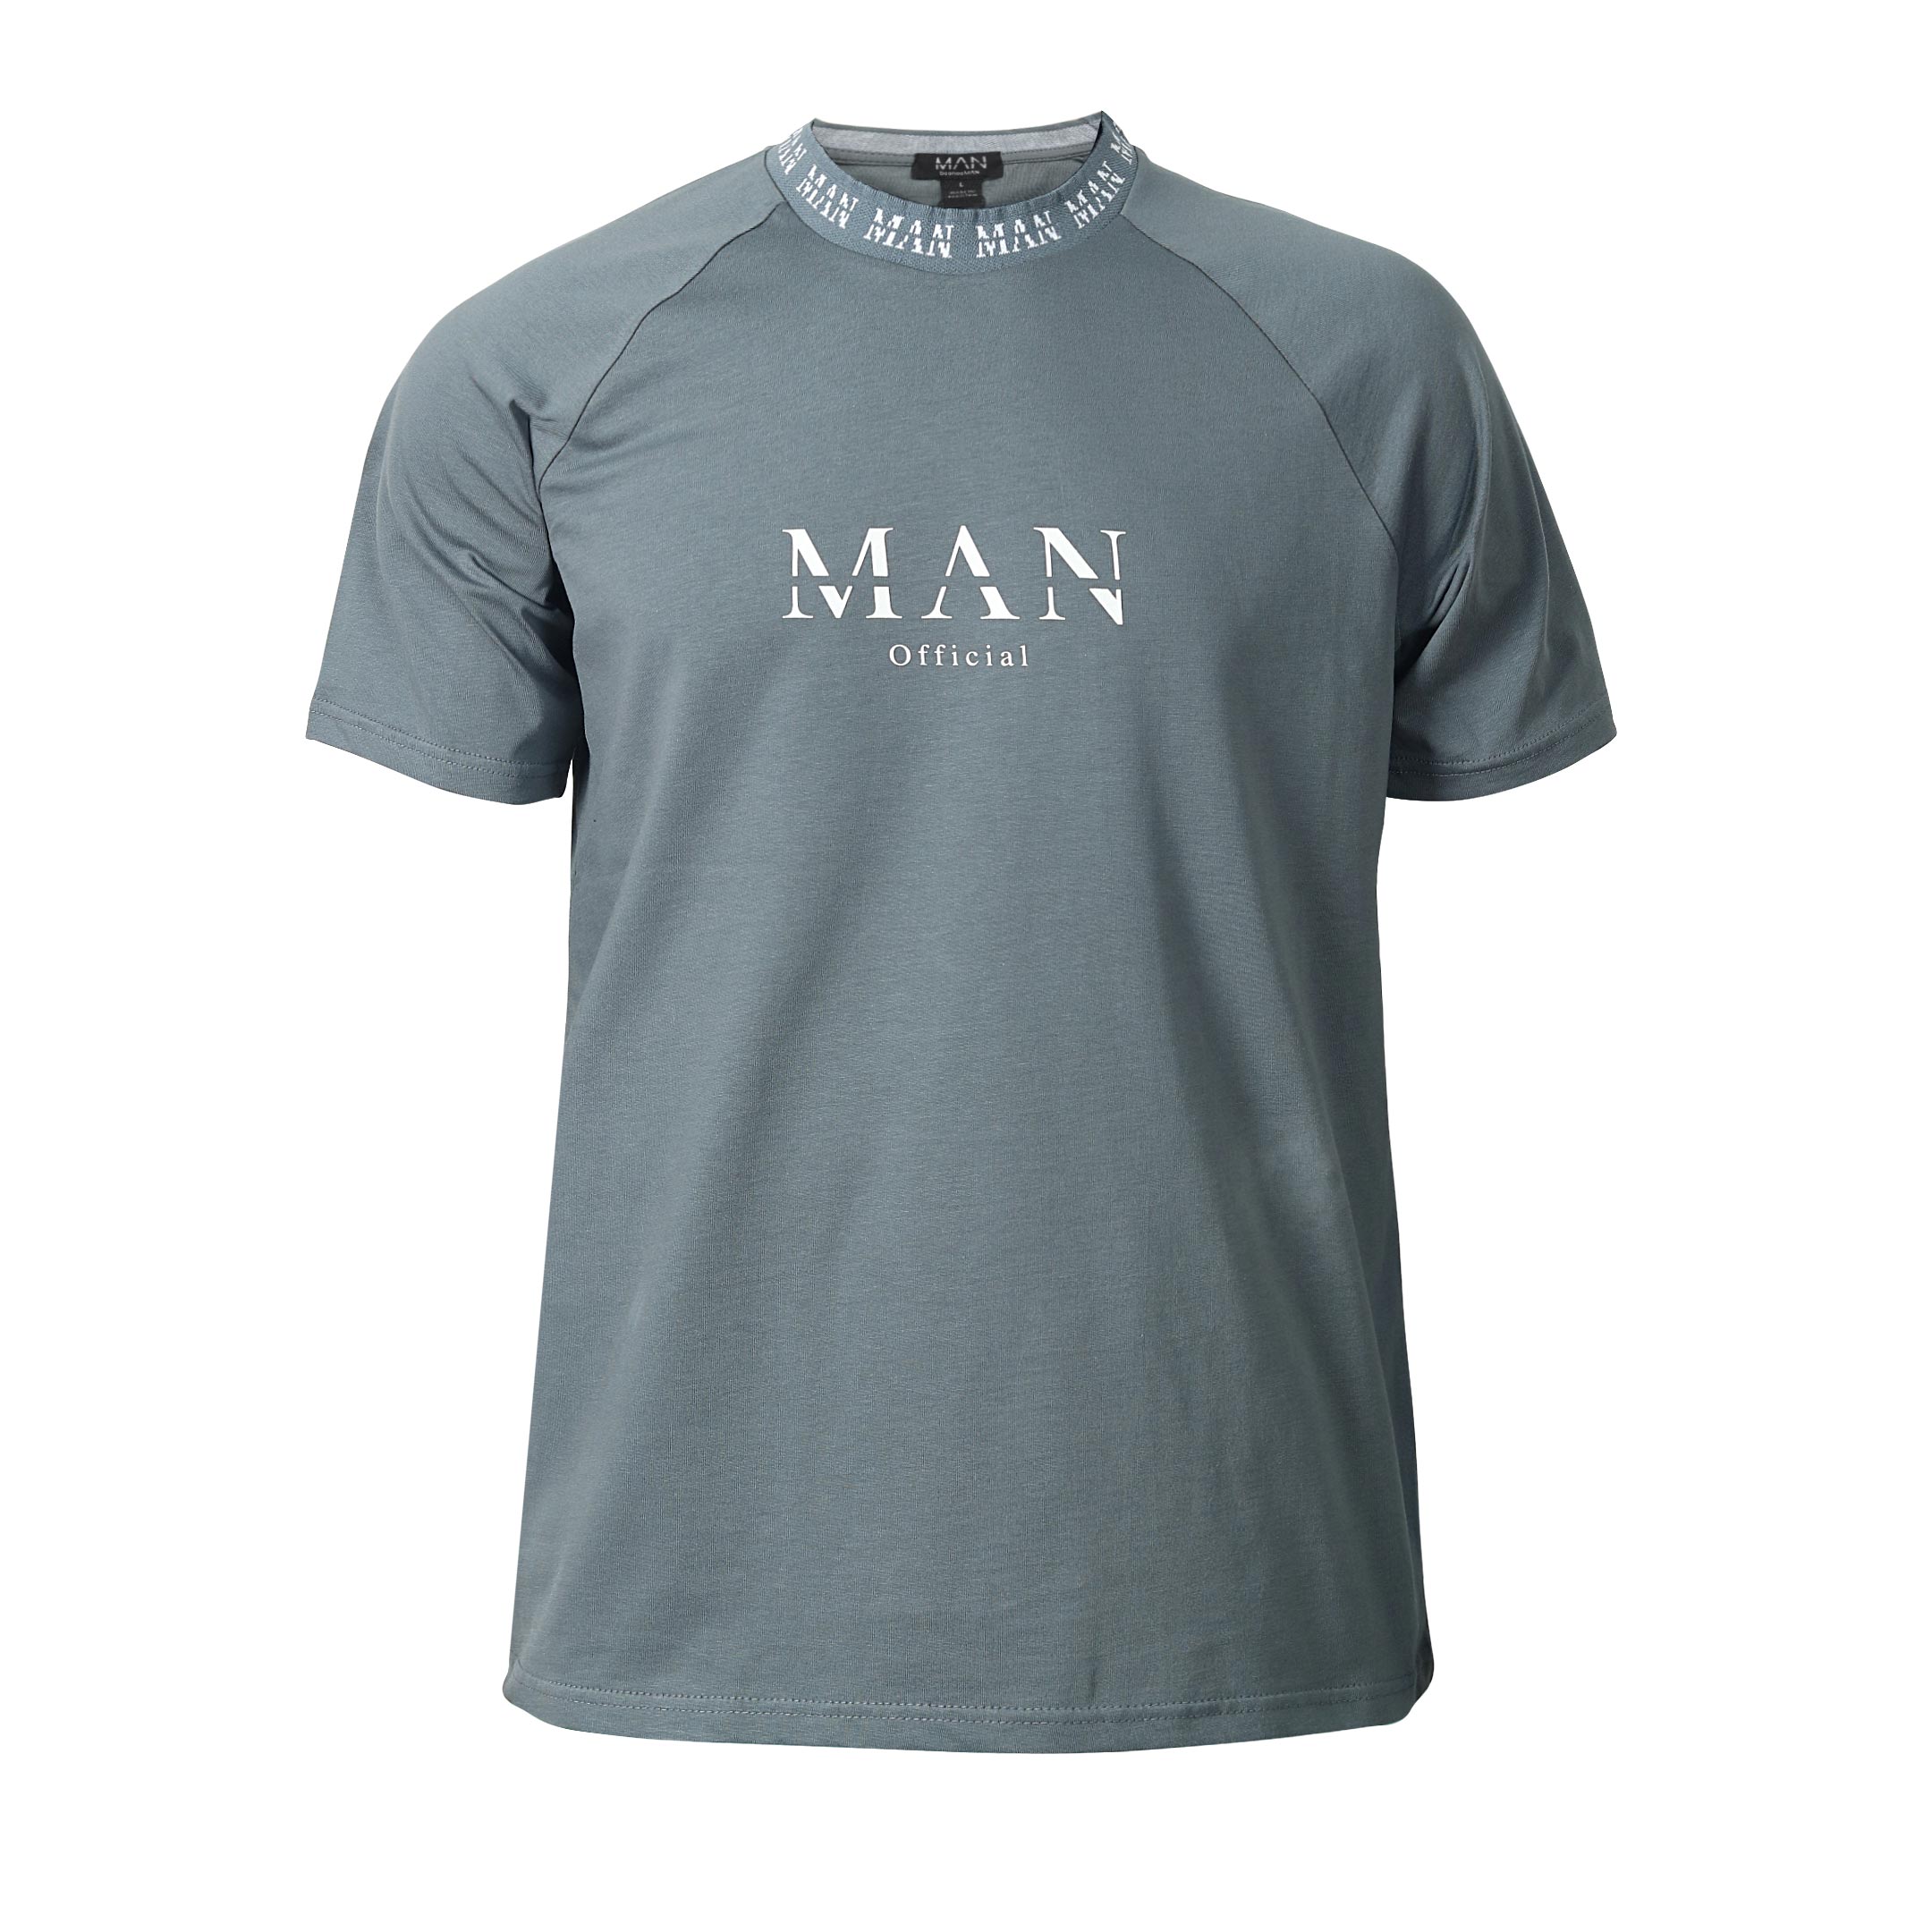 Boohoo Man T-Shirt Slate Blue Printed Logo (MAN OFFICAL)